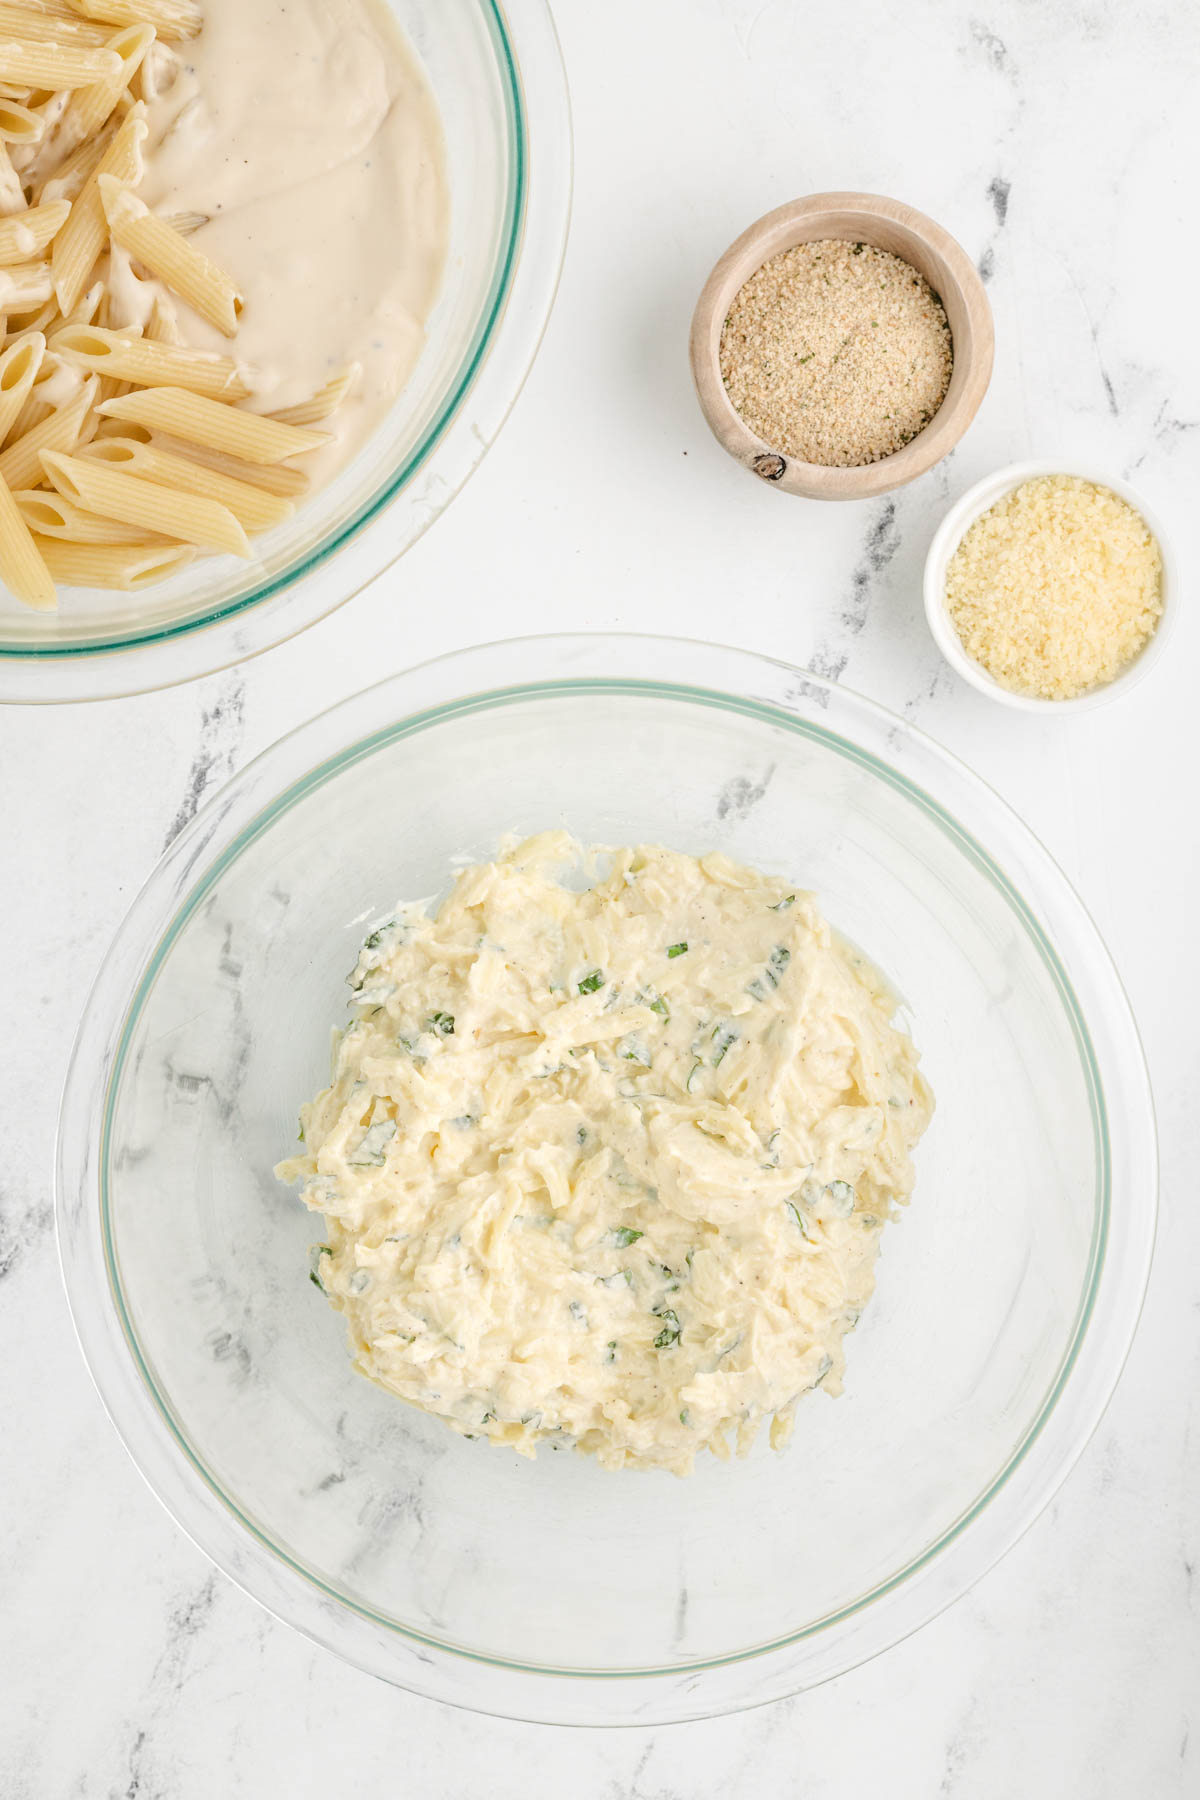 Parmesan and ricotta cheeses, egg and basil next to a bowl of pasta.